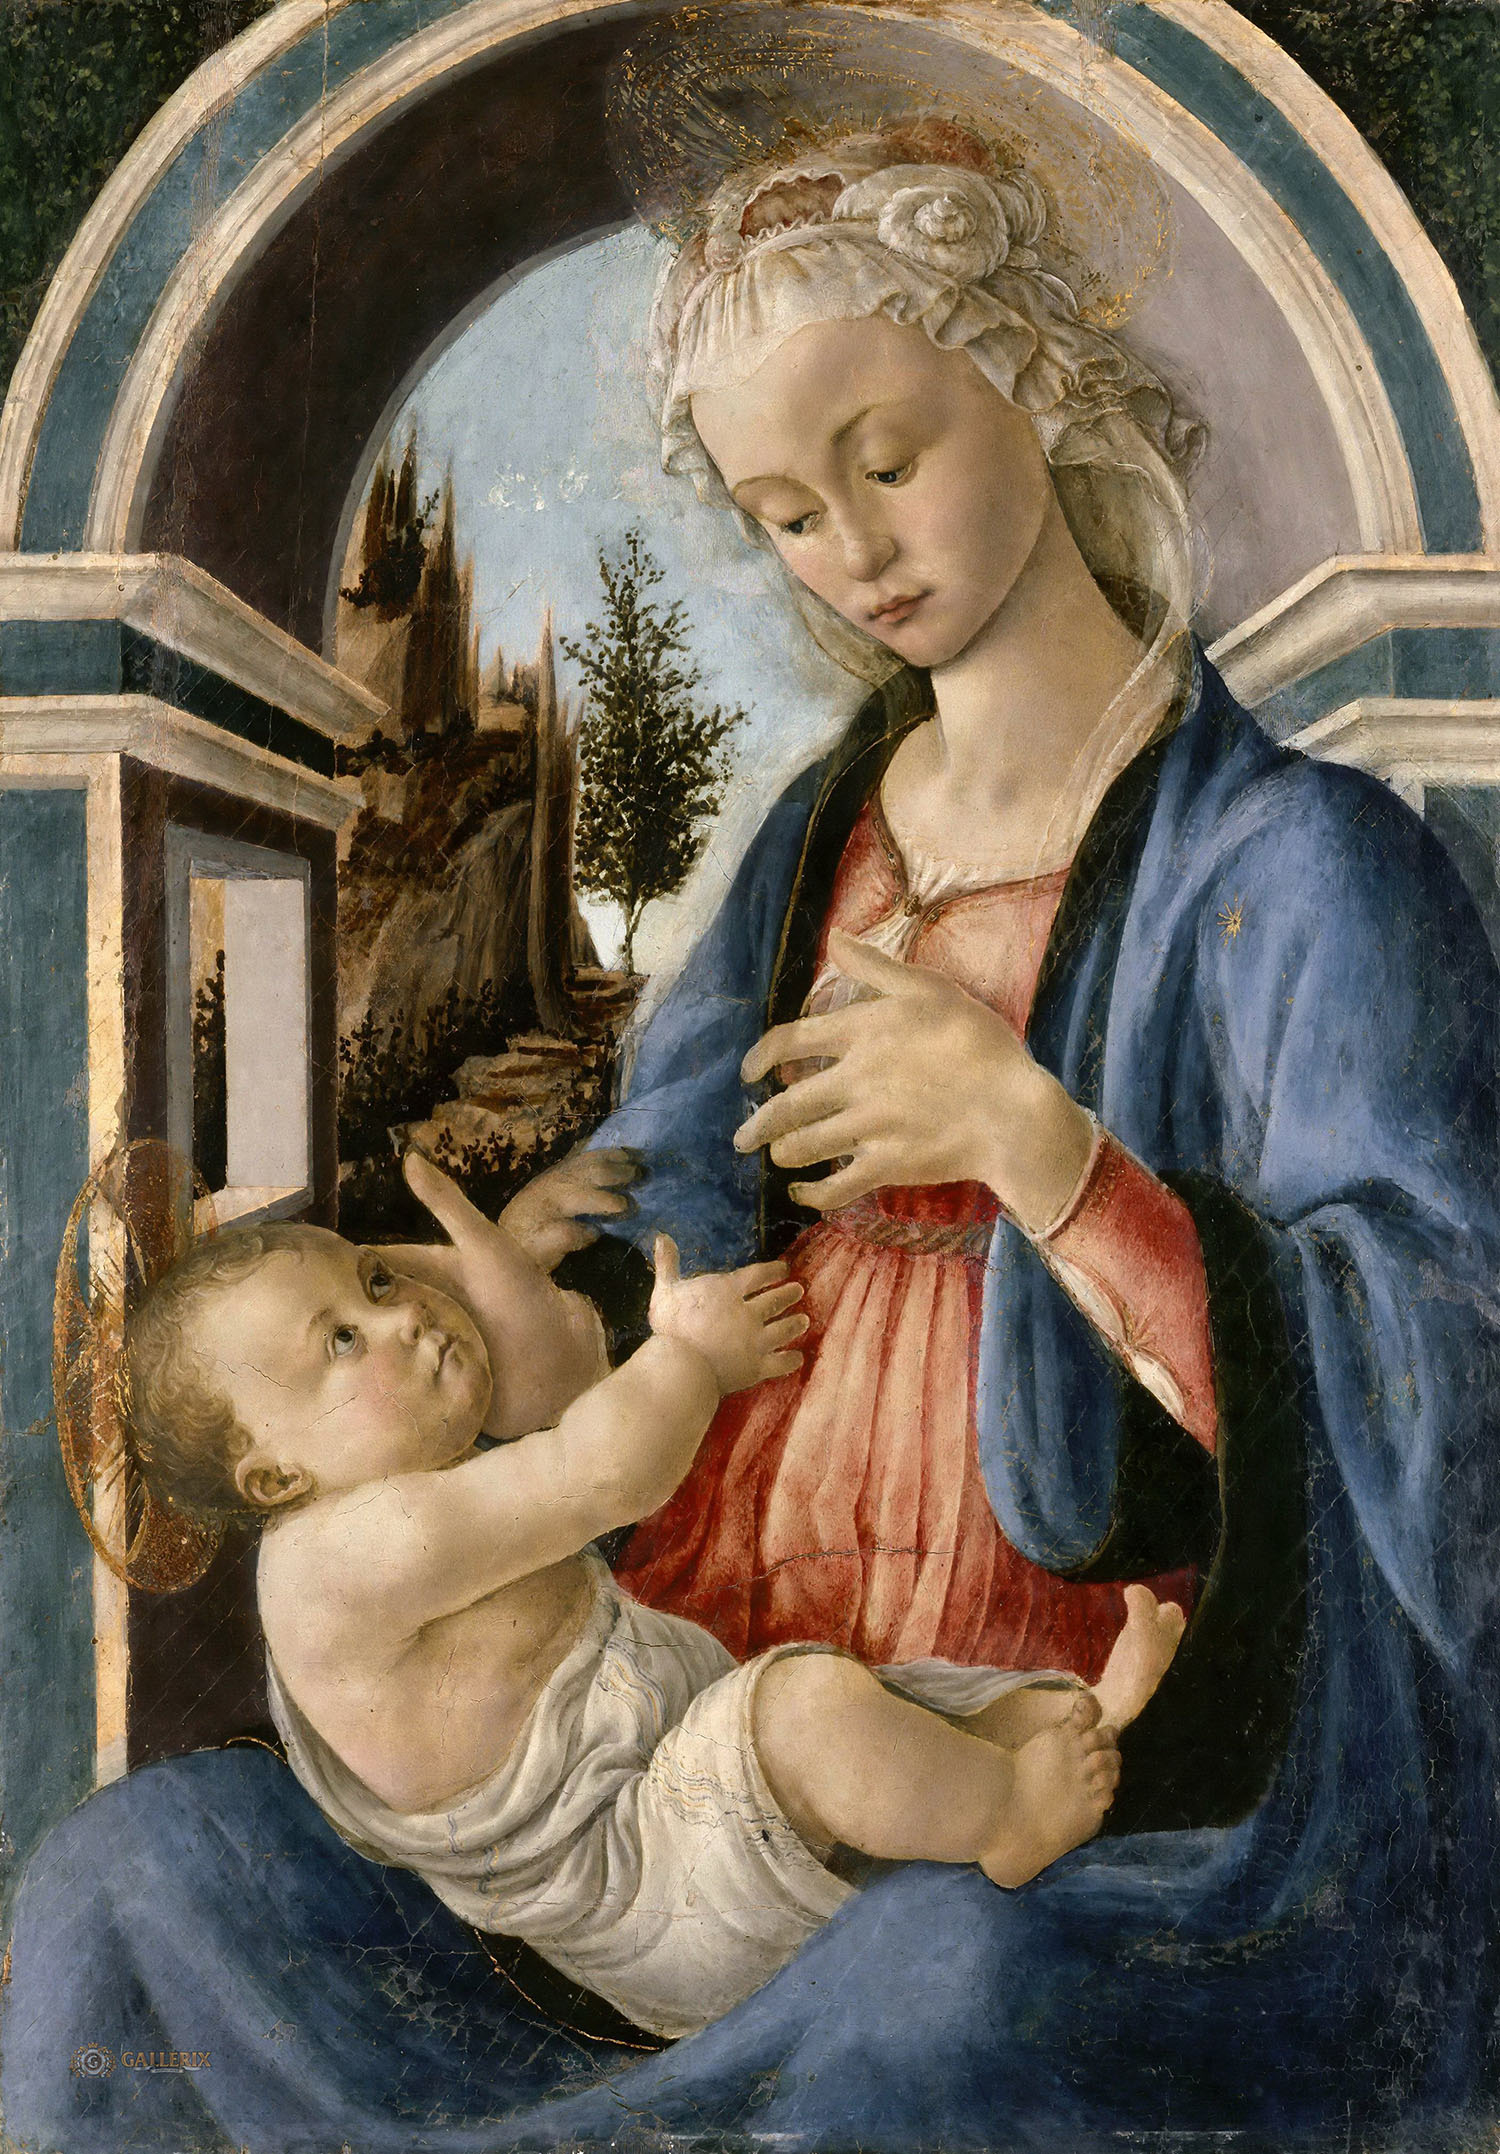 Сандро Боттичелли. "Мадонна с Младенцем". Около 1467. Музей Пти-Пале, Авиньон.